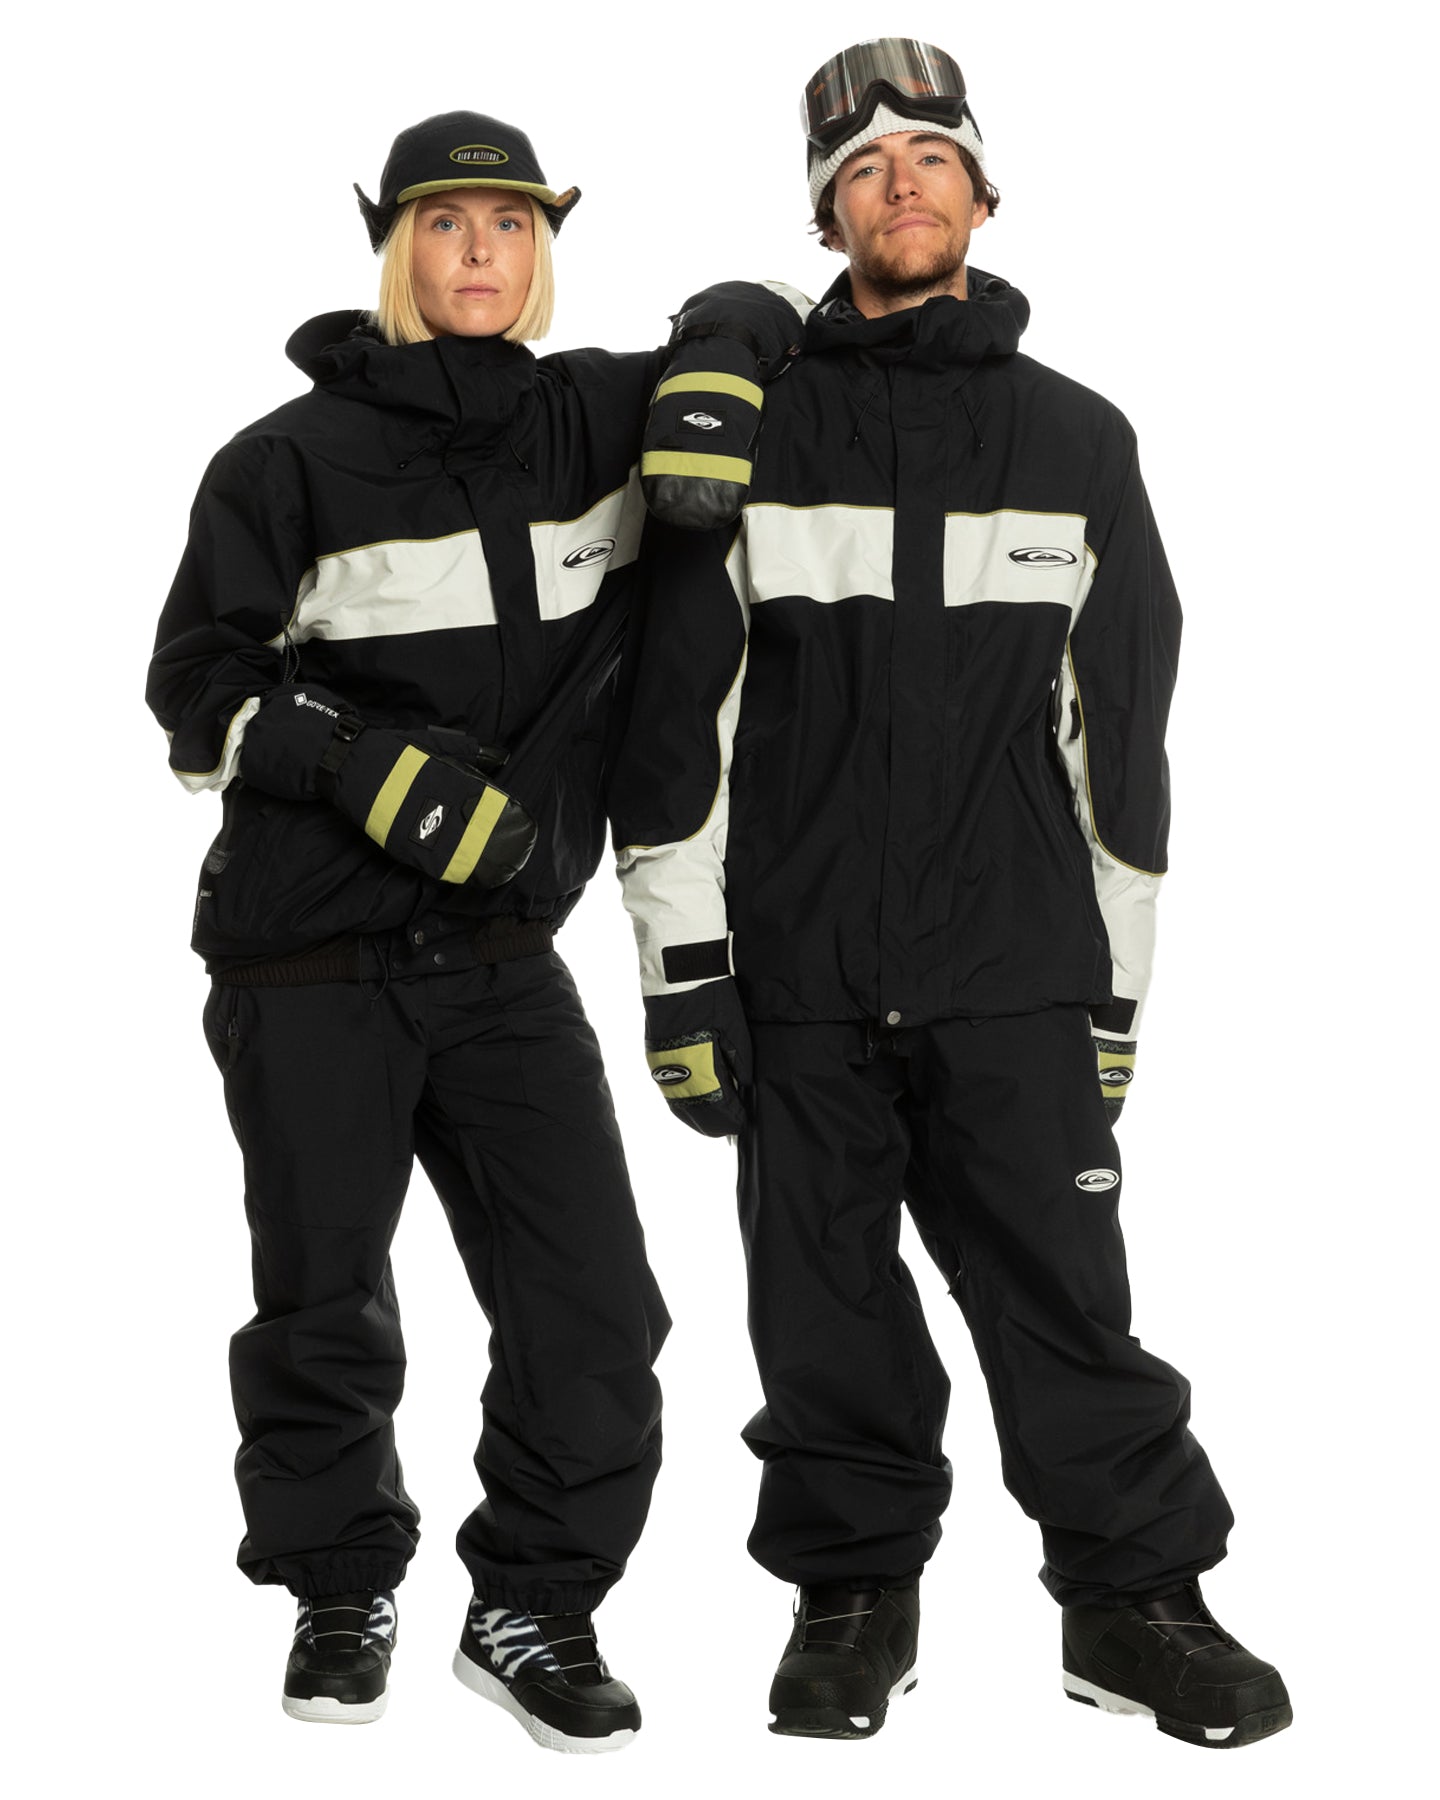 Quiksilver Men's Snow Down Technical Cargo Pants - True Black Men's Snow Pants - Trojan Wake Ski Snow